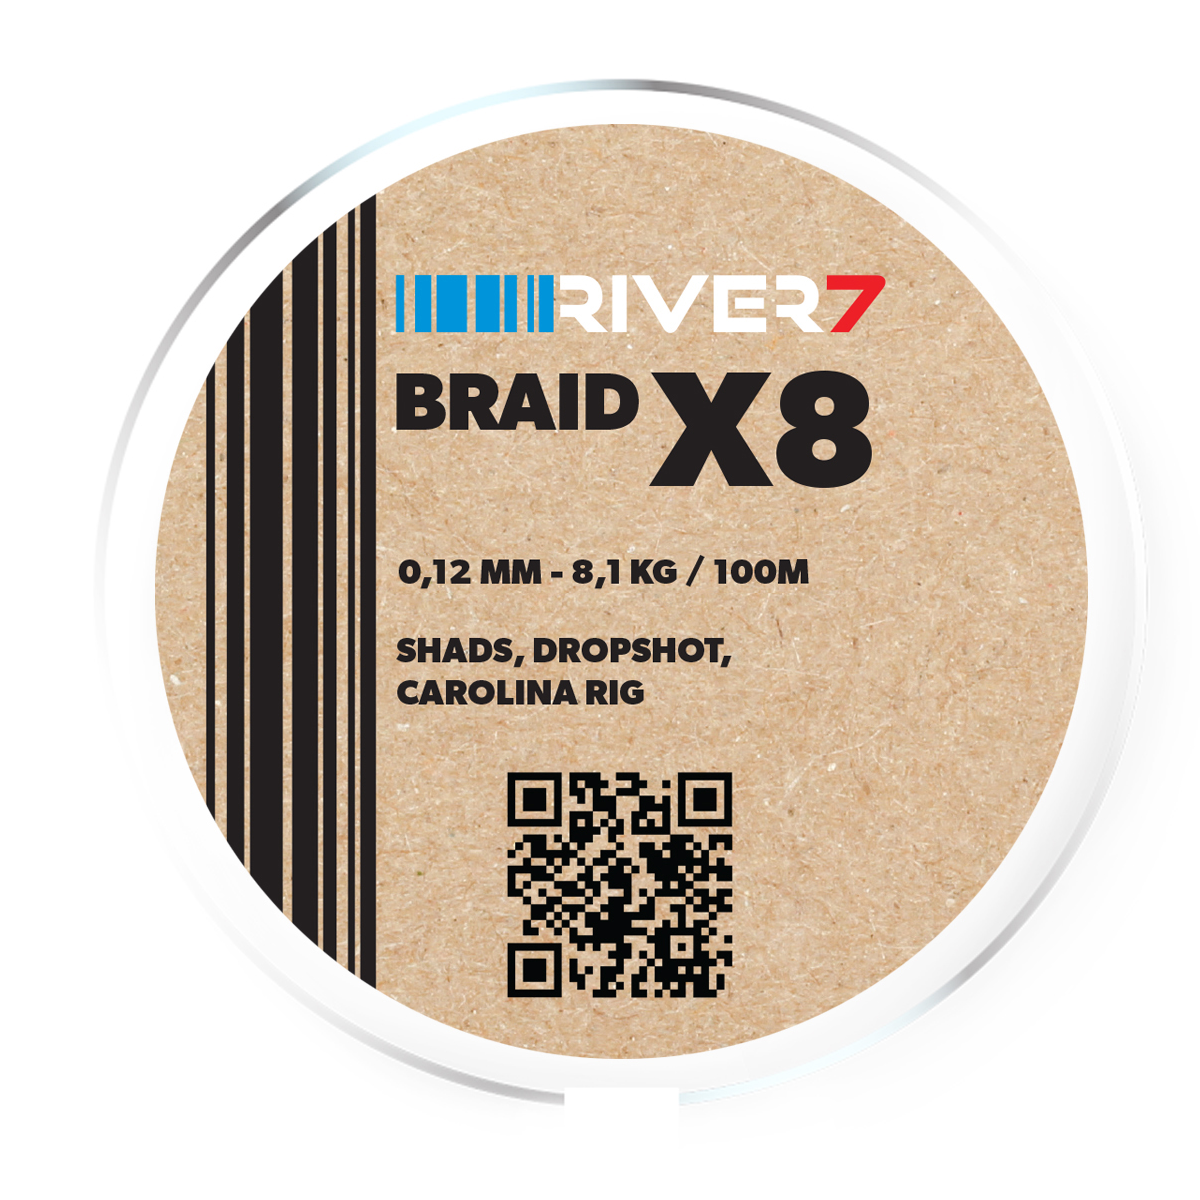 River7 X8 Braid